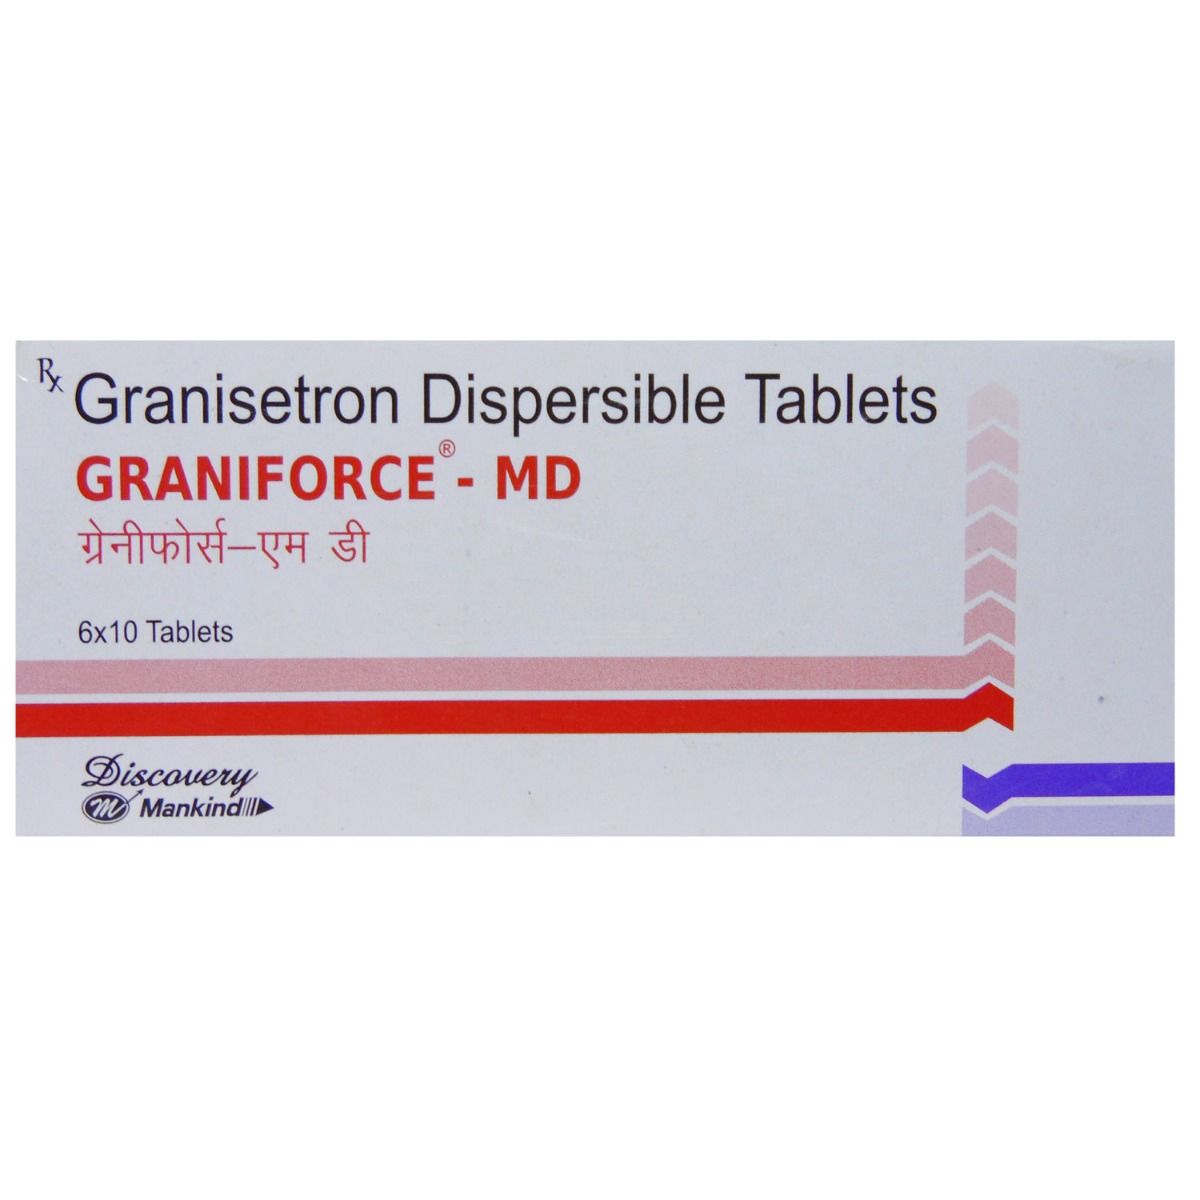 Buy Graniforce -MD Tablet 10's Online